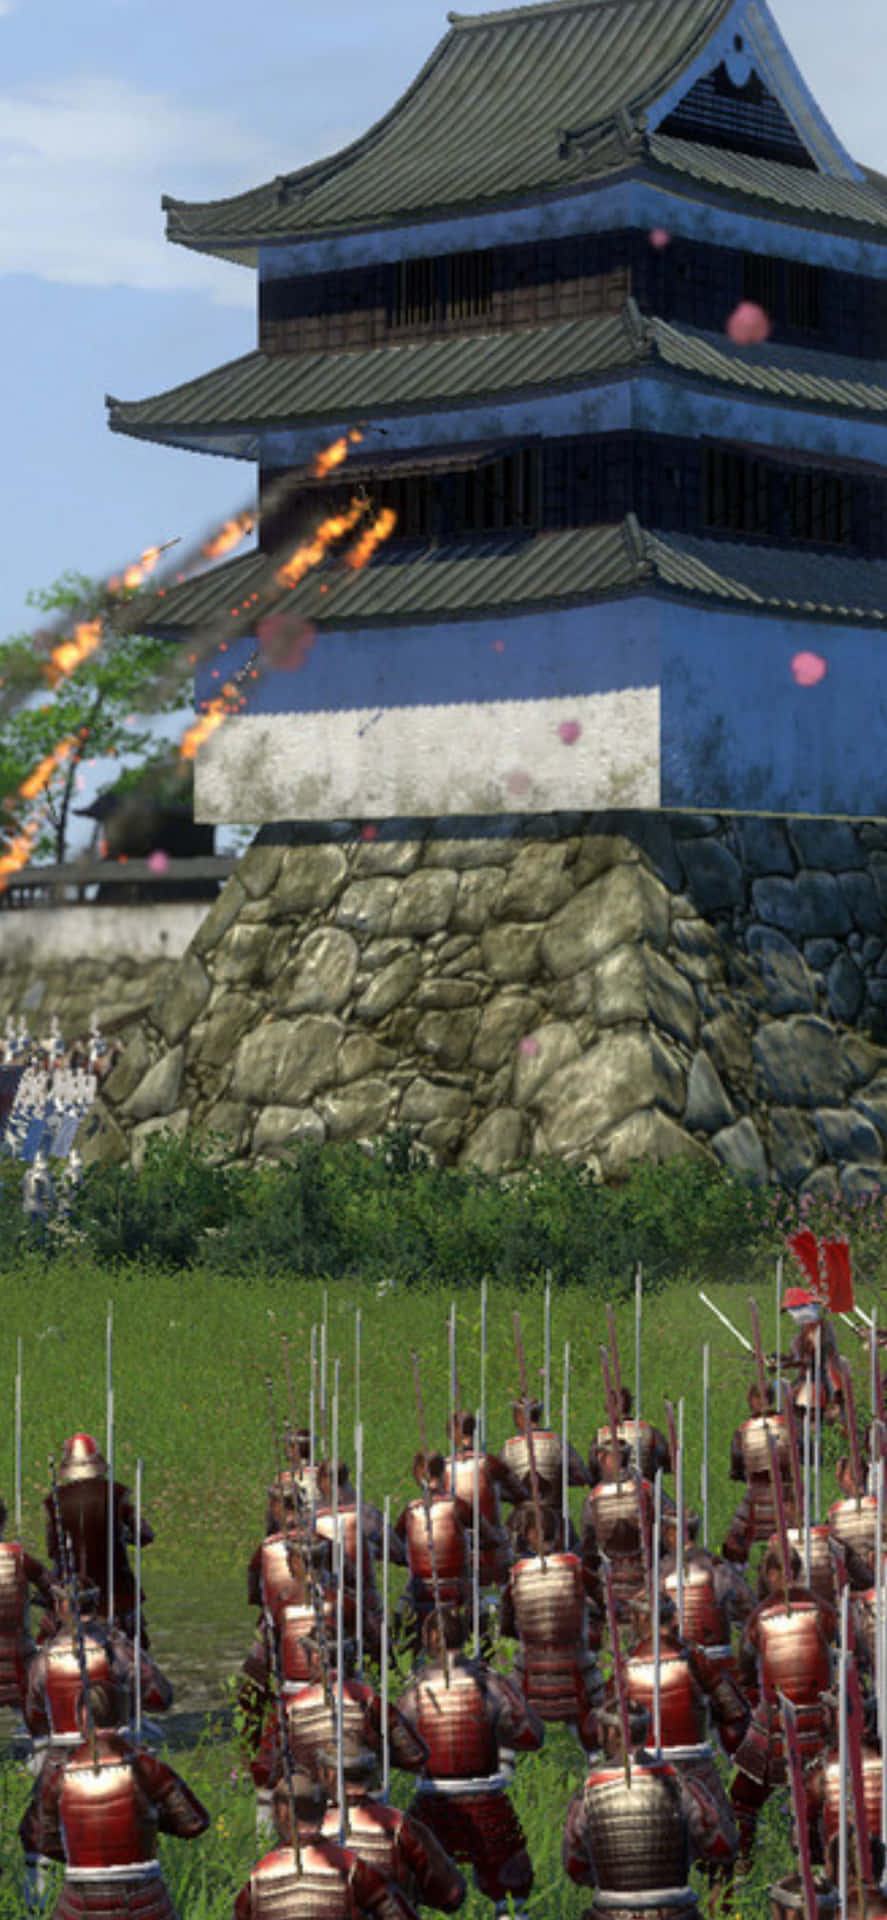 Iphone X Total War Shogun 2 Background